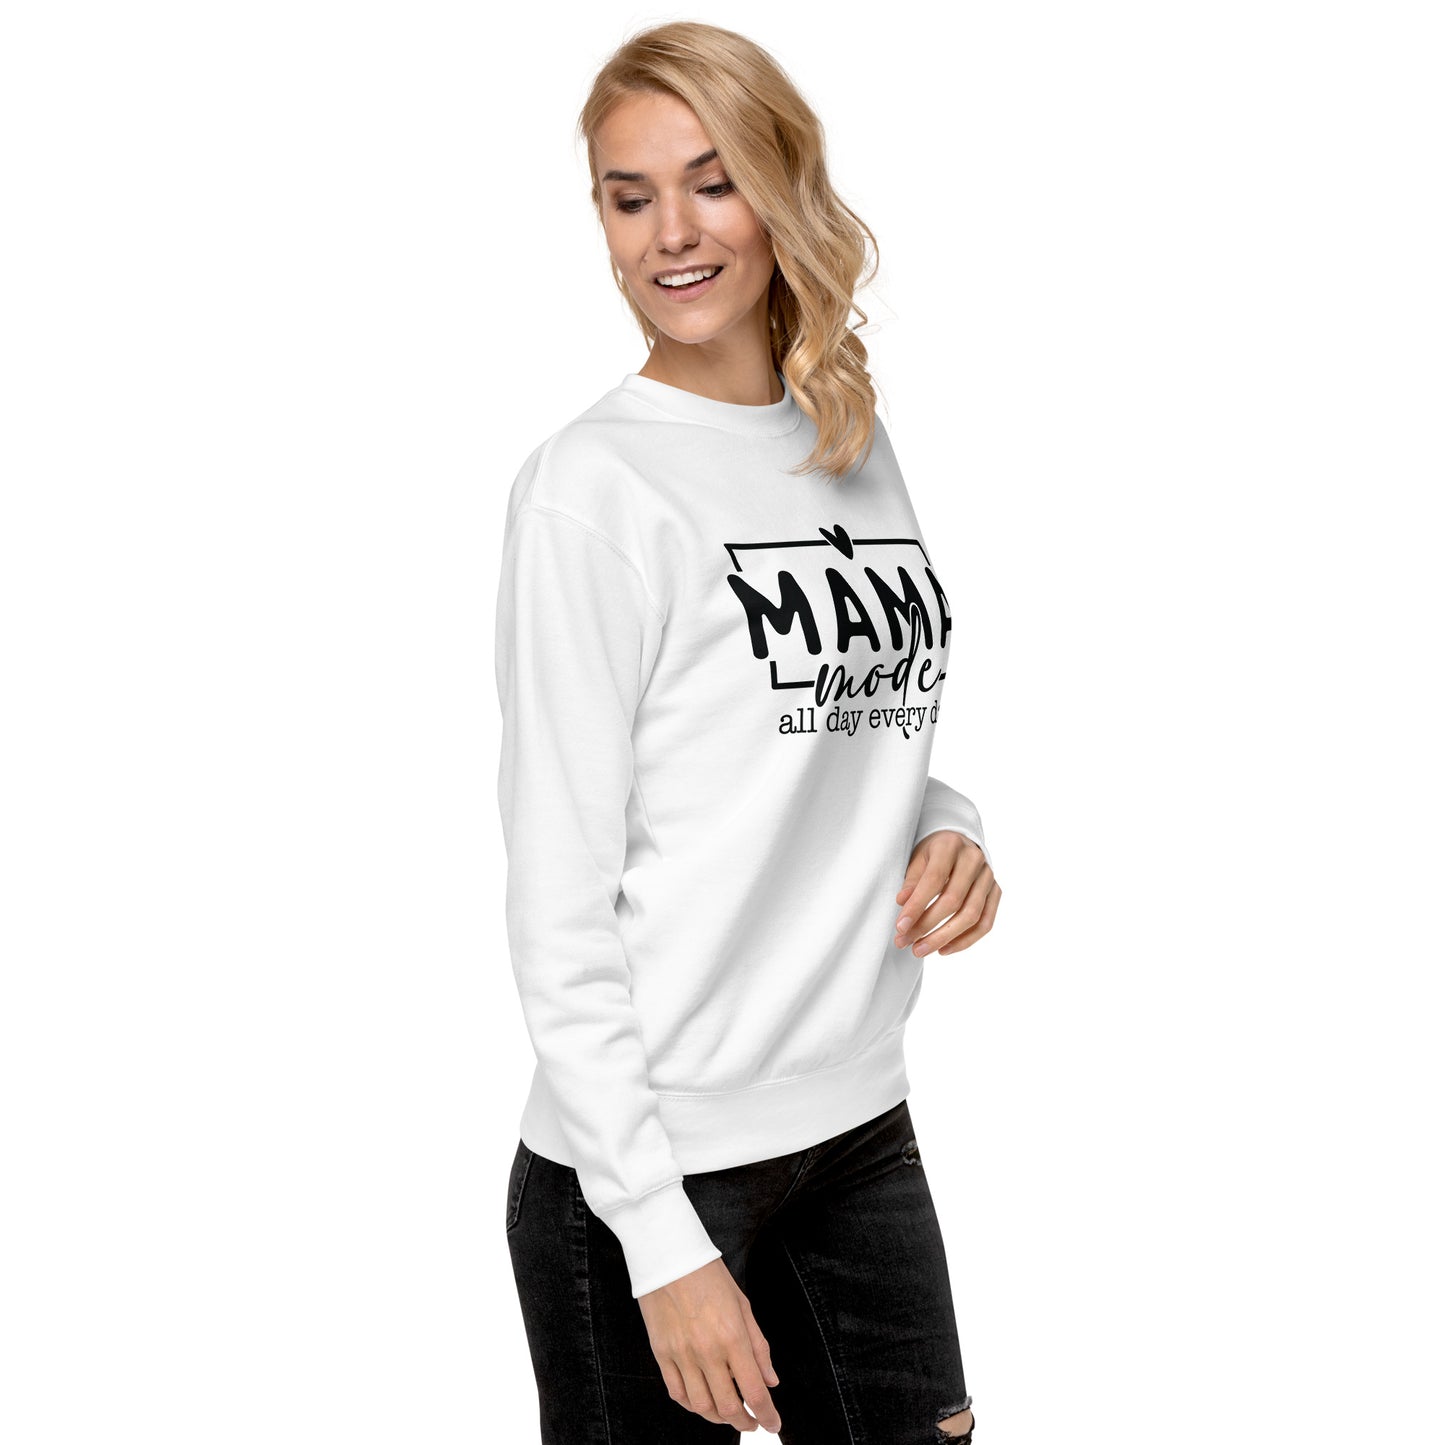 Moma Mode Premium Sweatshirt CedarHill Country Market